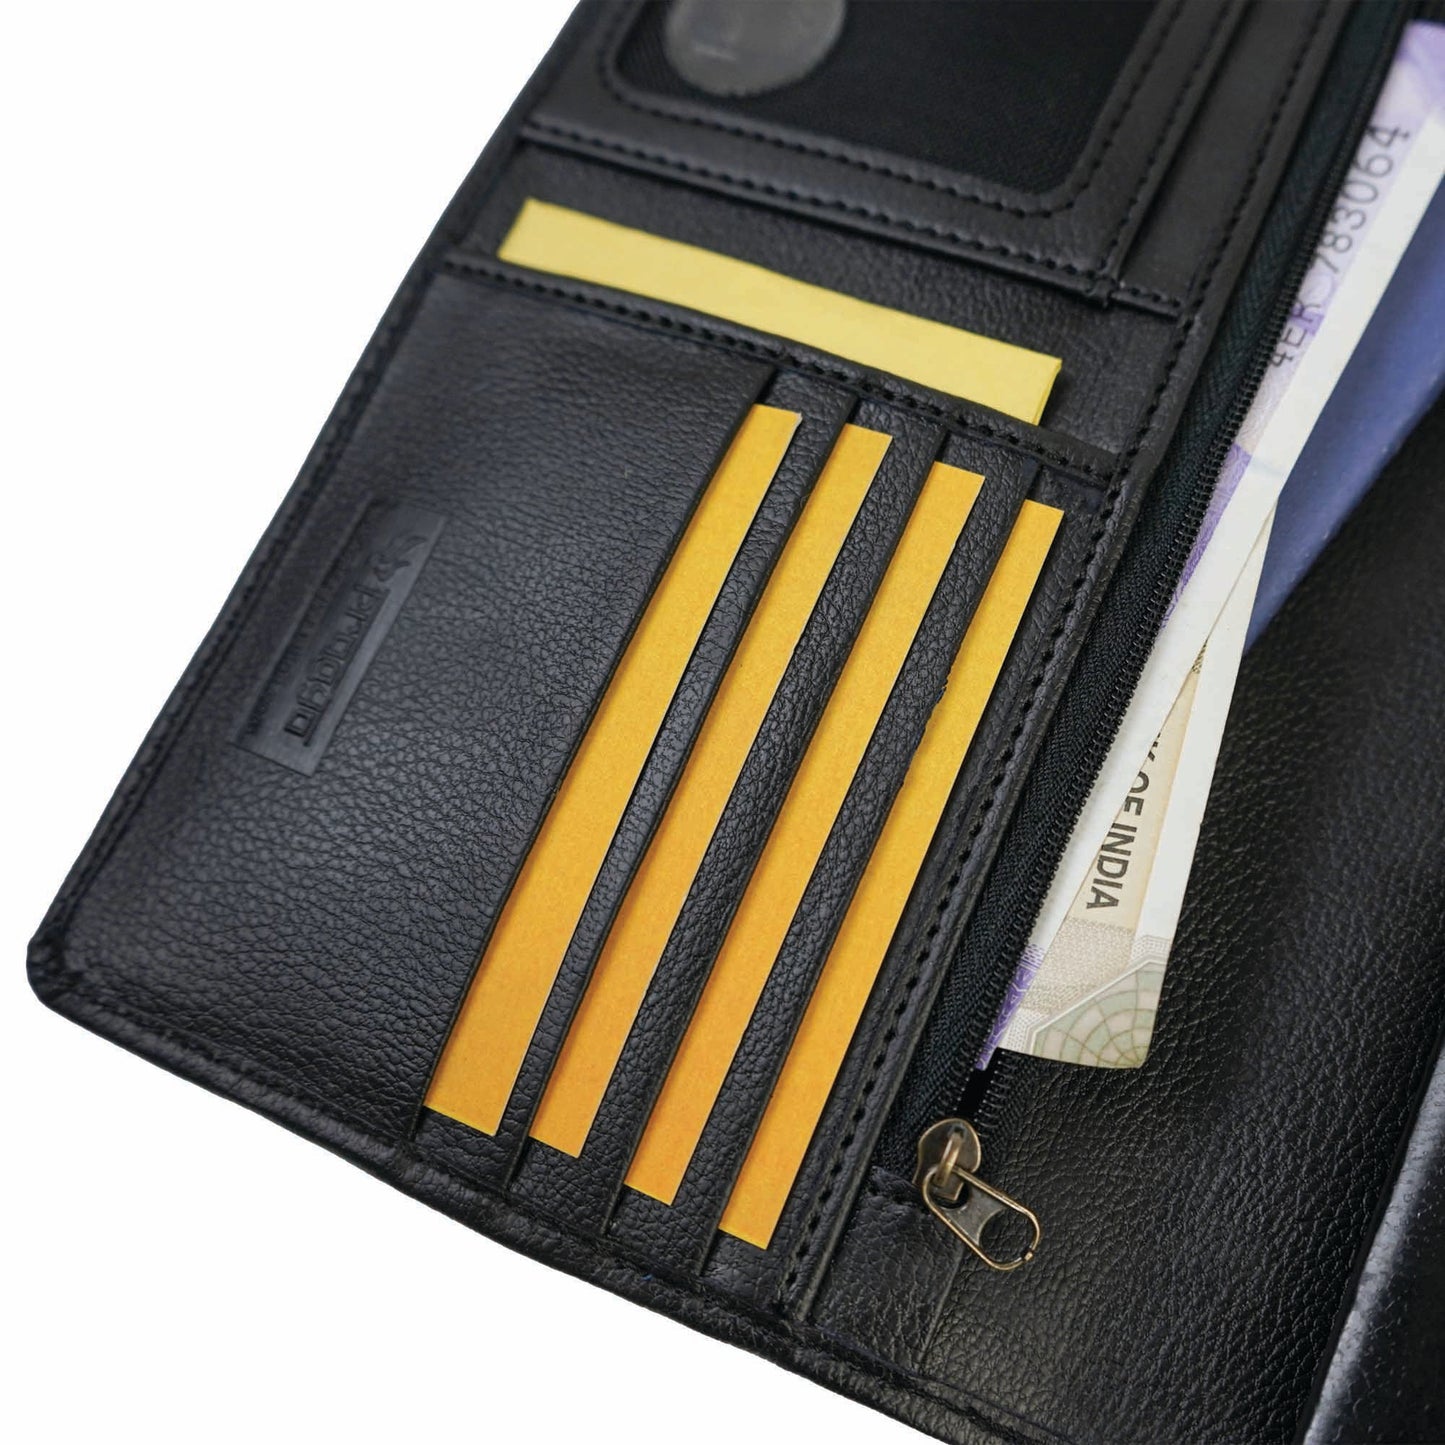 Pragya Premium 13cm x 22.5cm Leather Journal Travel Organizer - Currency Pocket with Zip Closure